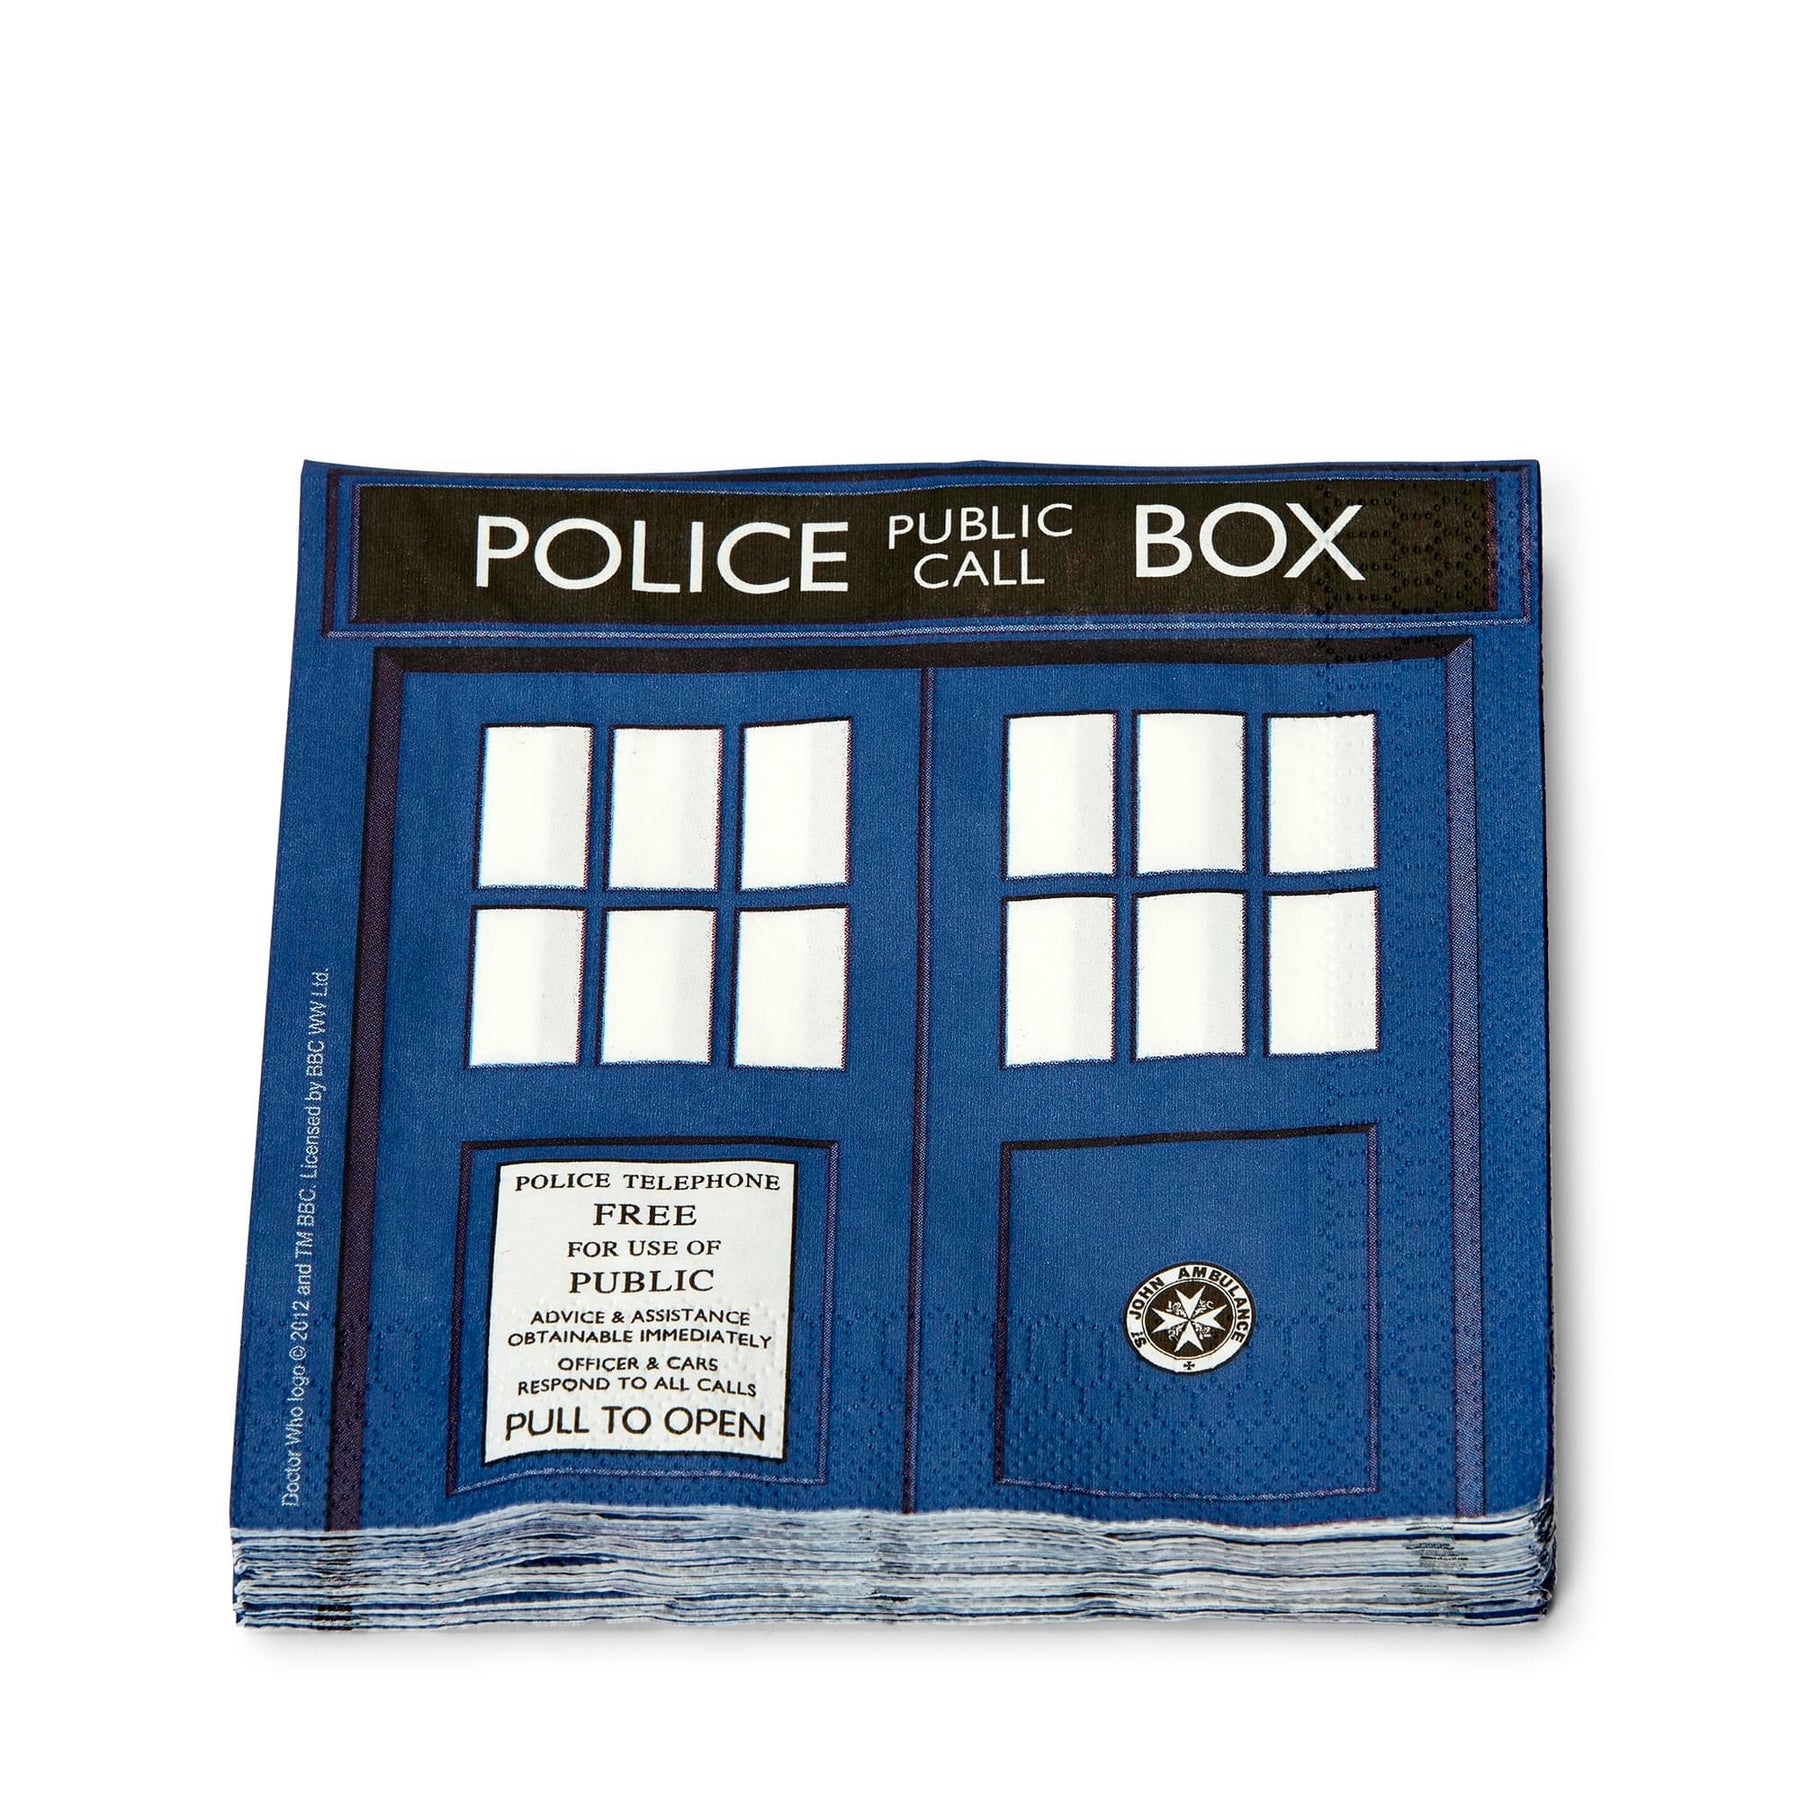 Doctor Who 6.5" TARDIS Paper Napkins, Set of 20